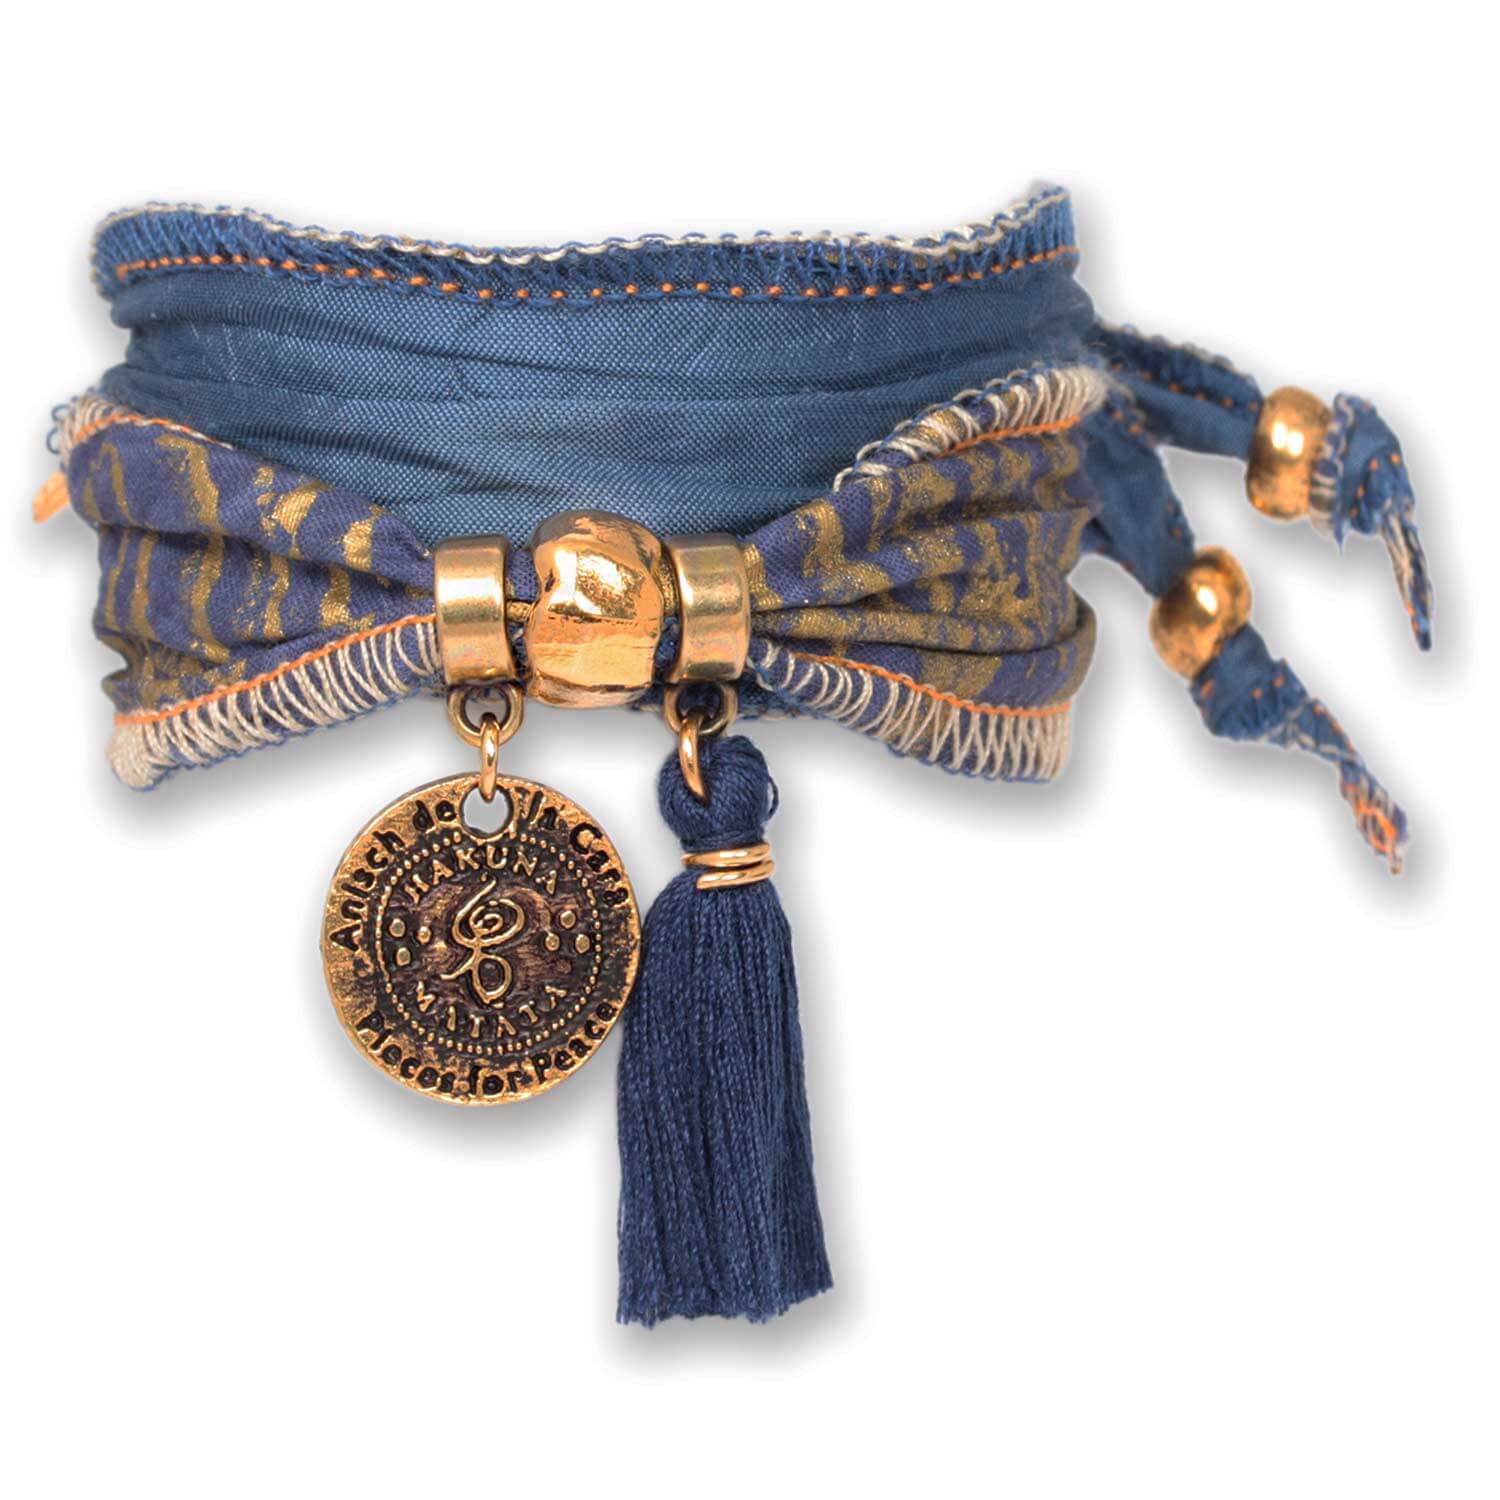 Blue Sky - Hakuna Matata luck bracelet made of sun fabrics